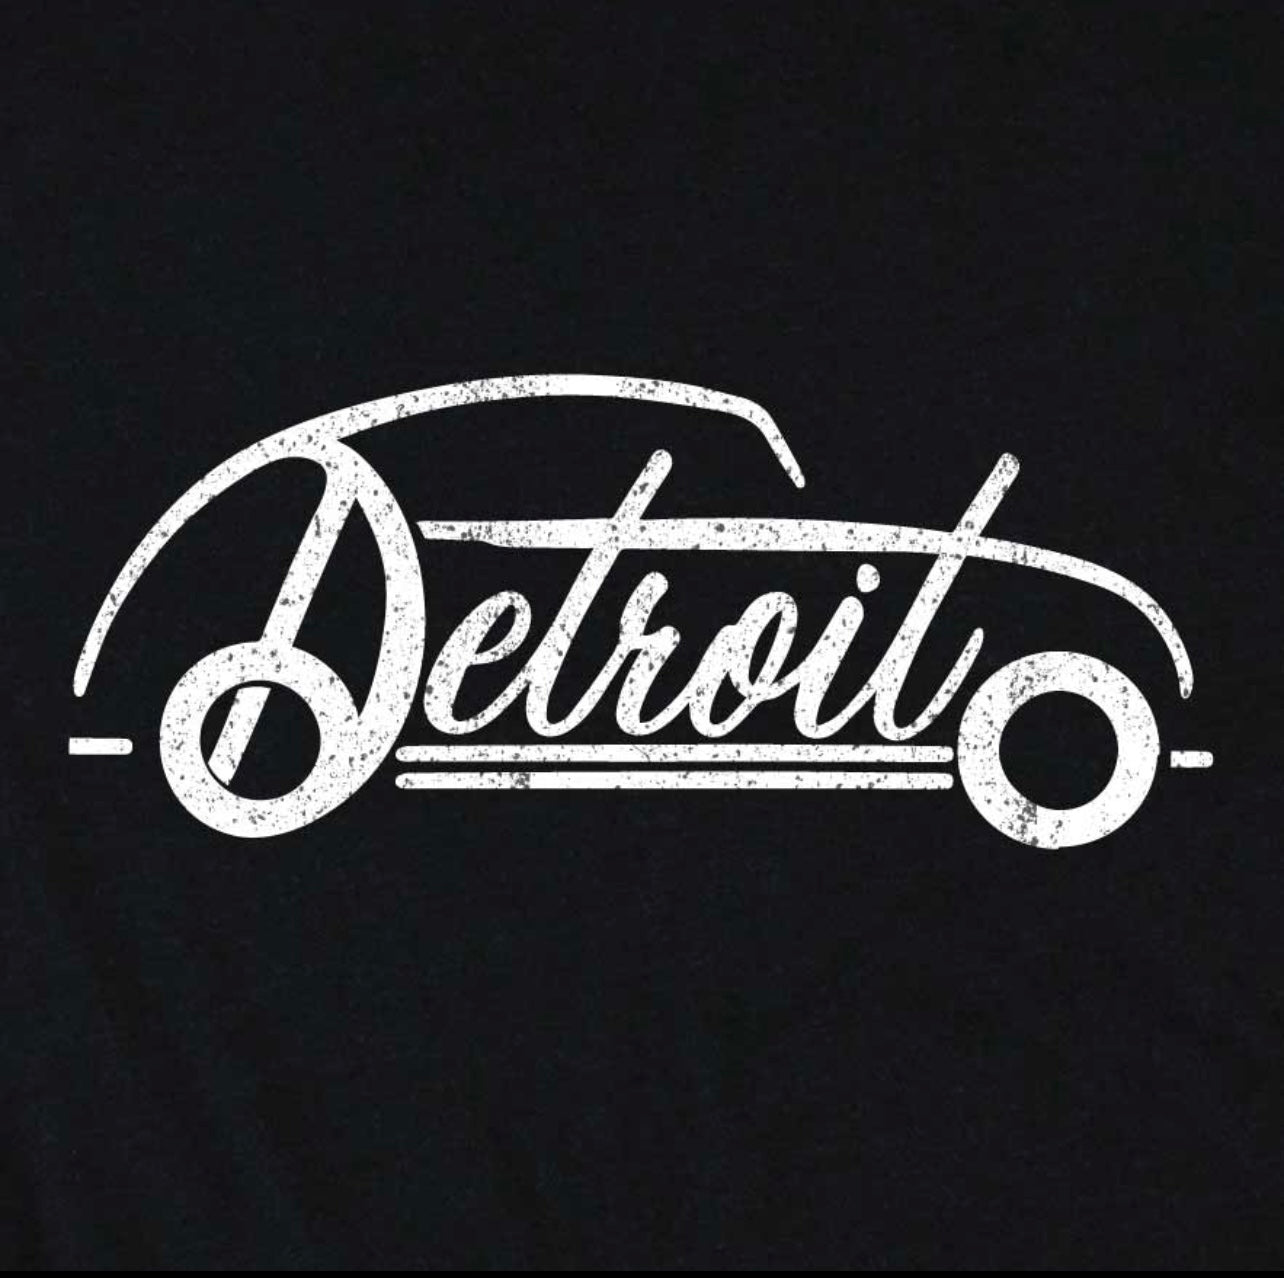 Detroit Classic Car Tshirt